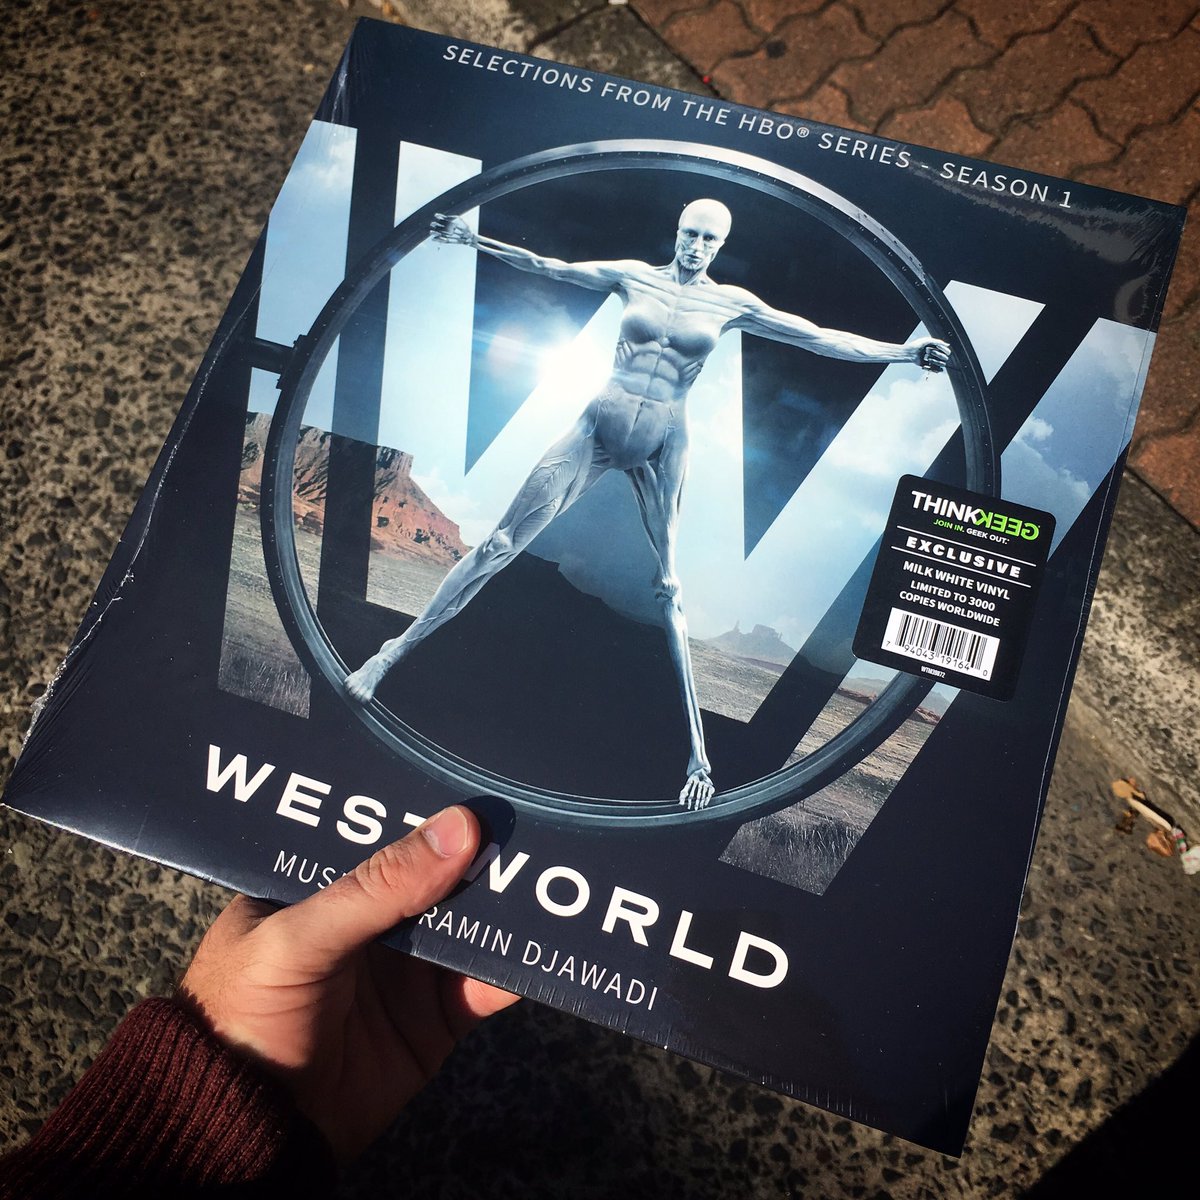 RT @DaveJohns: Proud owner of ...
#westworld #vinyl #soundtrack @Djawadi_Ramin @evanrachelwood https://t.co/5AwRjFlILY